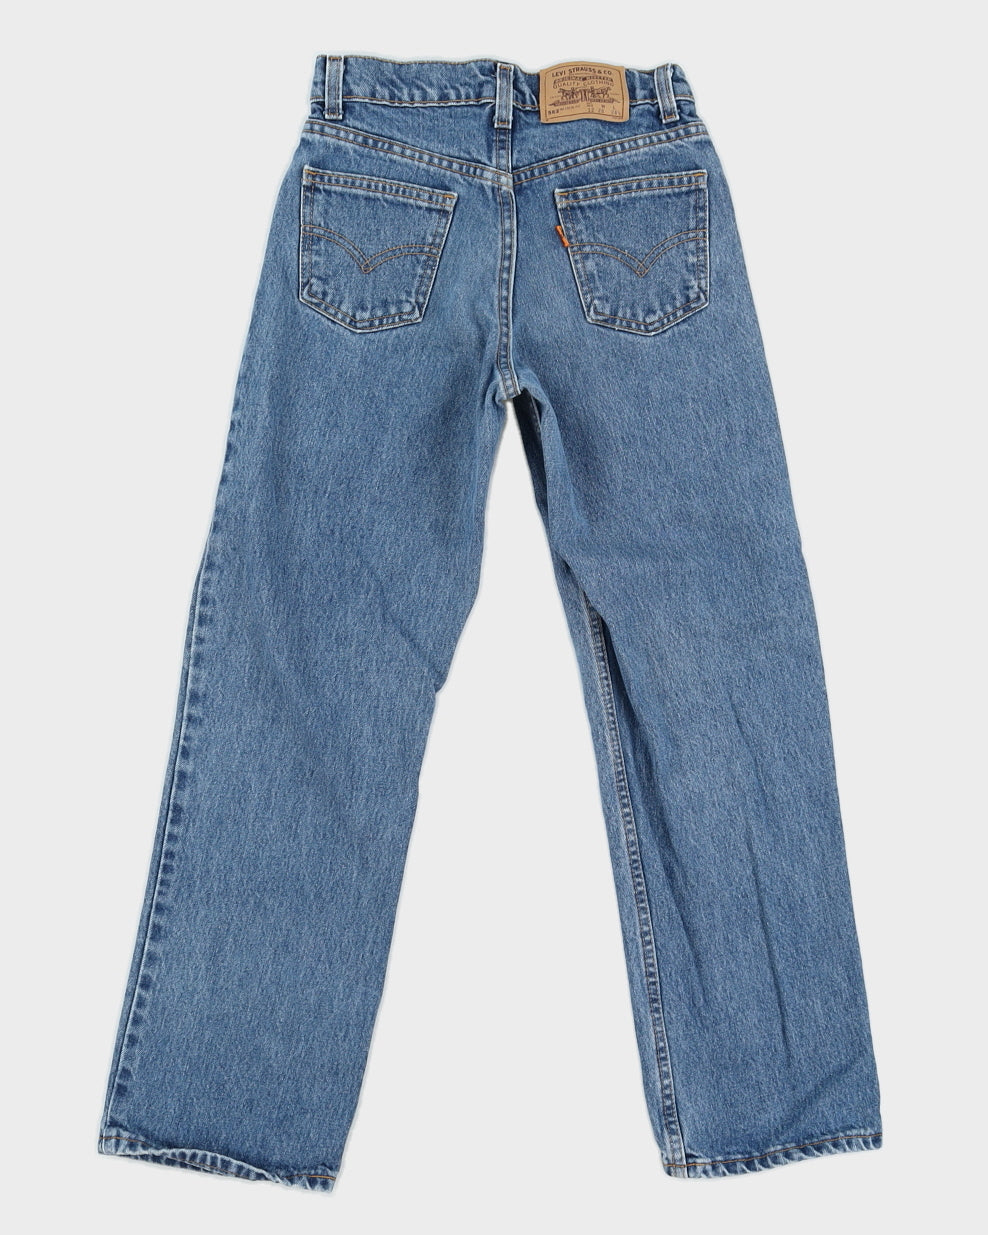 Vintage 90s Levi's Medium Wash Orange Tab Jeans - W24 L26